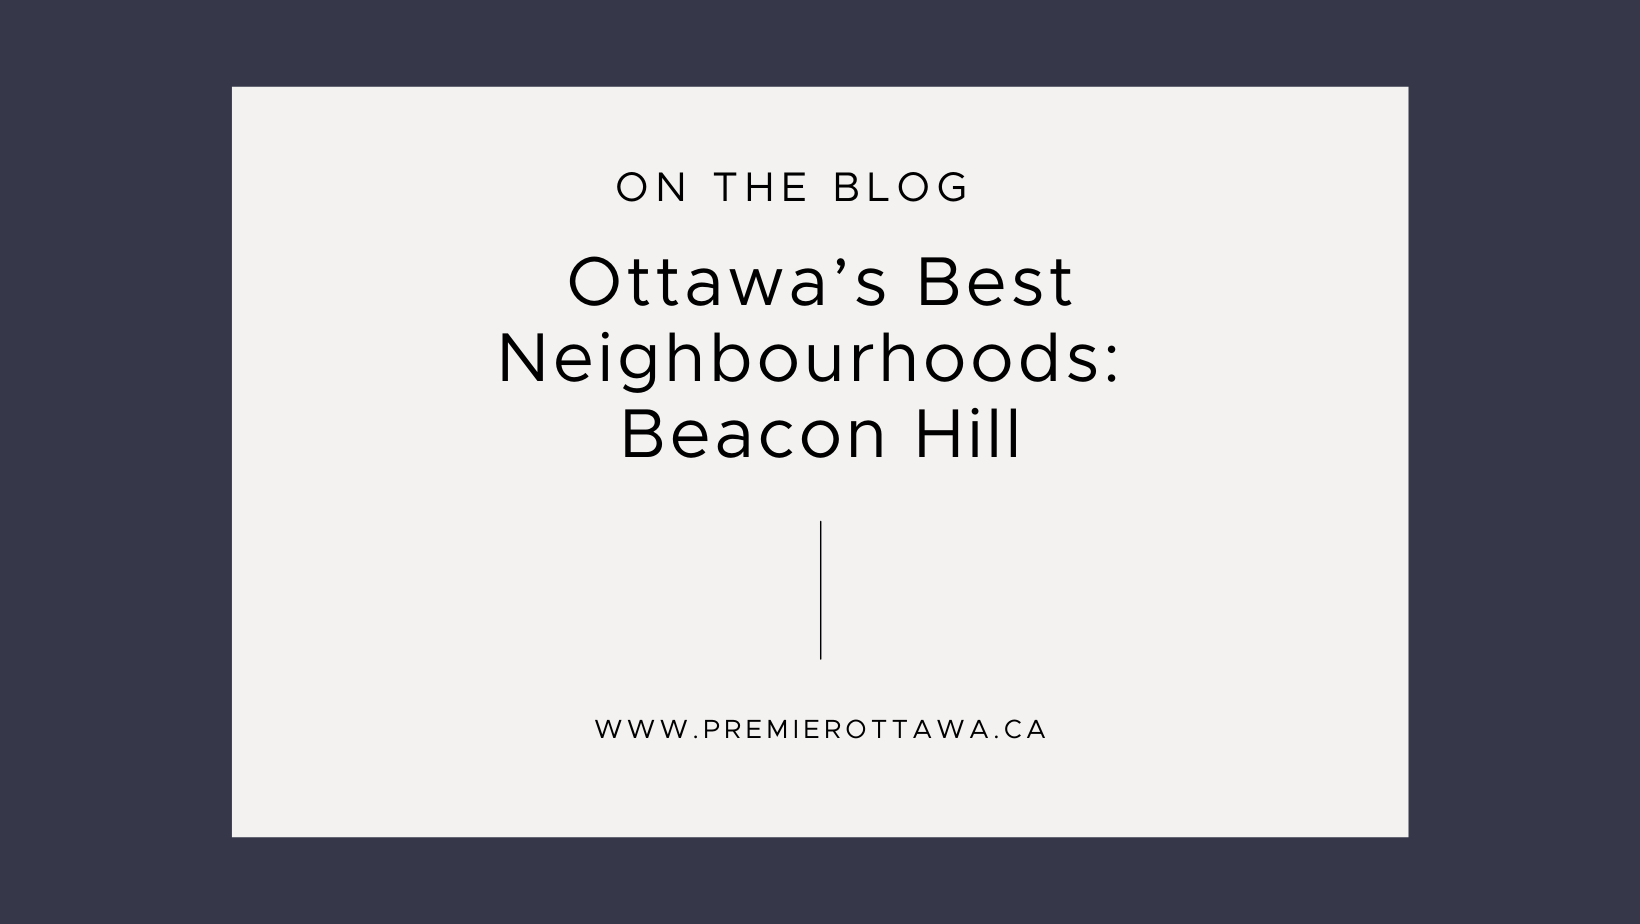 Beacon Hill: the neighborhood of great schools in Ottawa – Ottawa